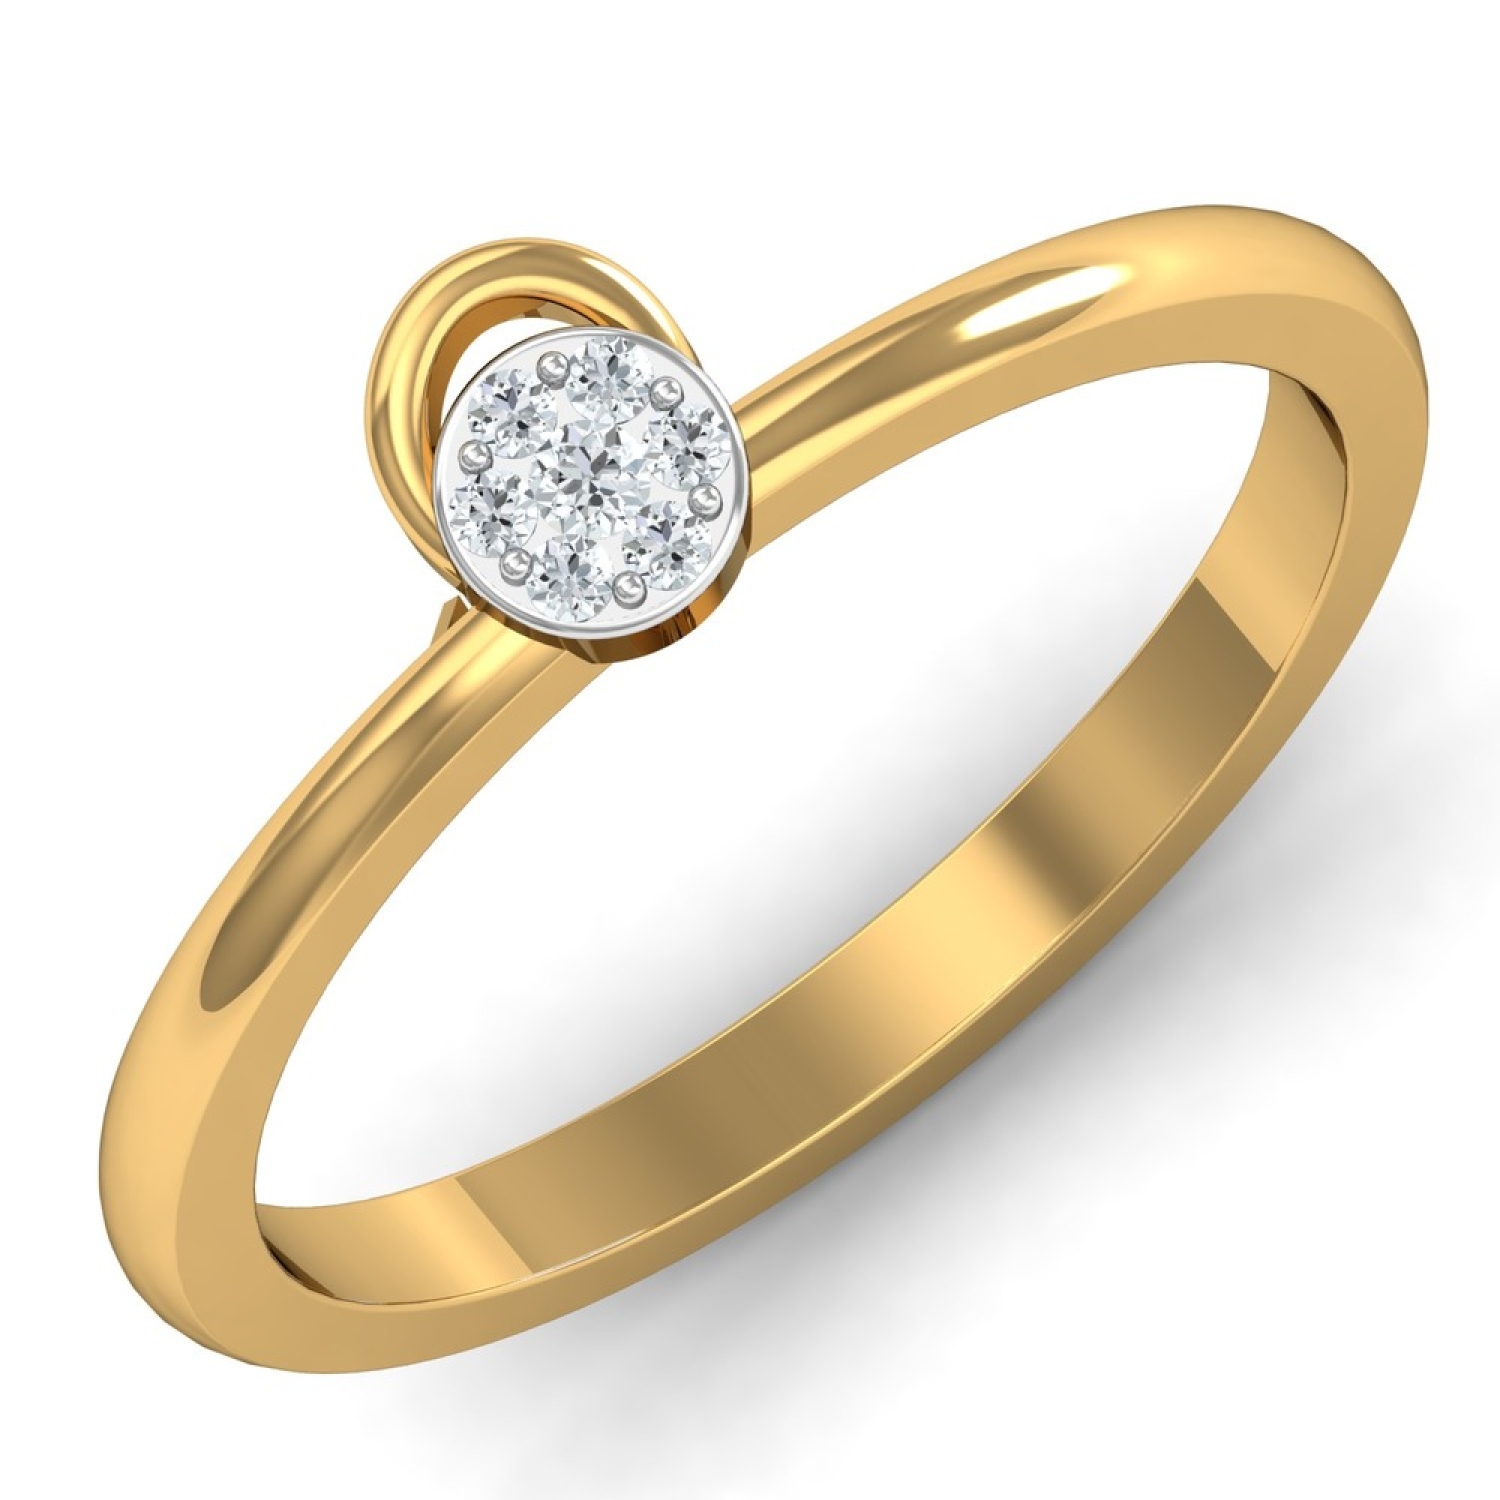 Buy Latest Diamond Rings Online in India - Joyalukkas